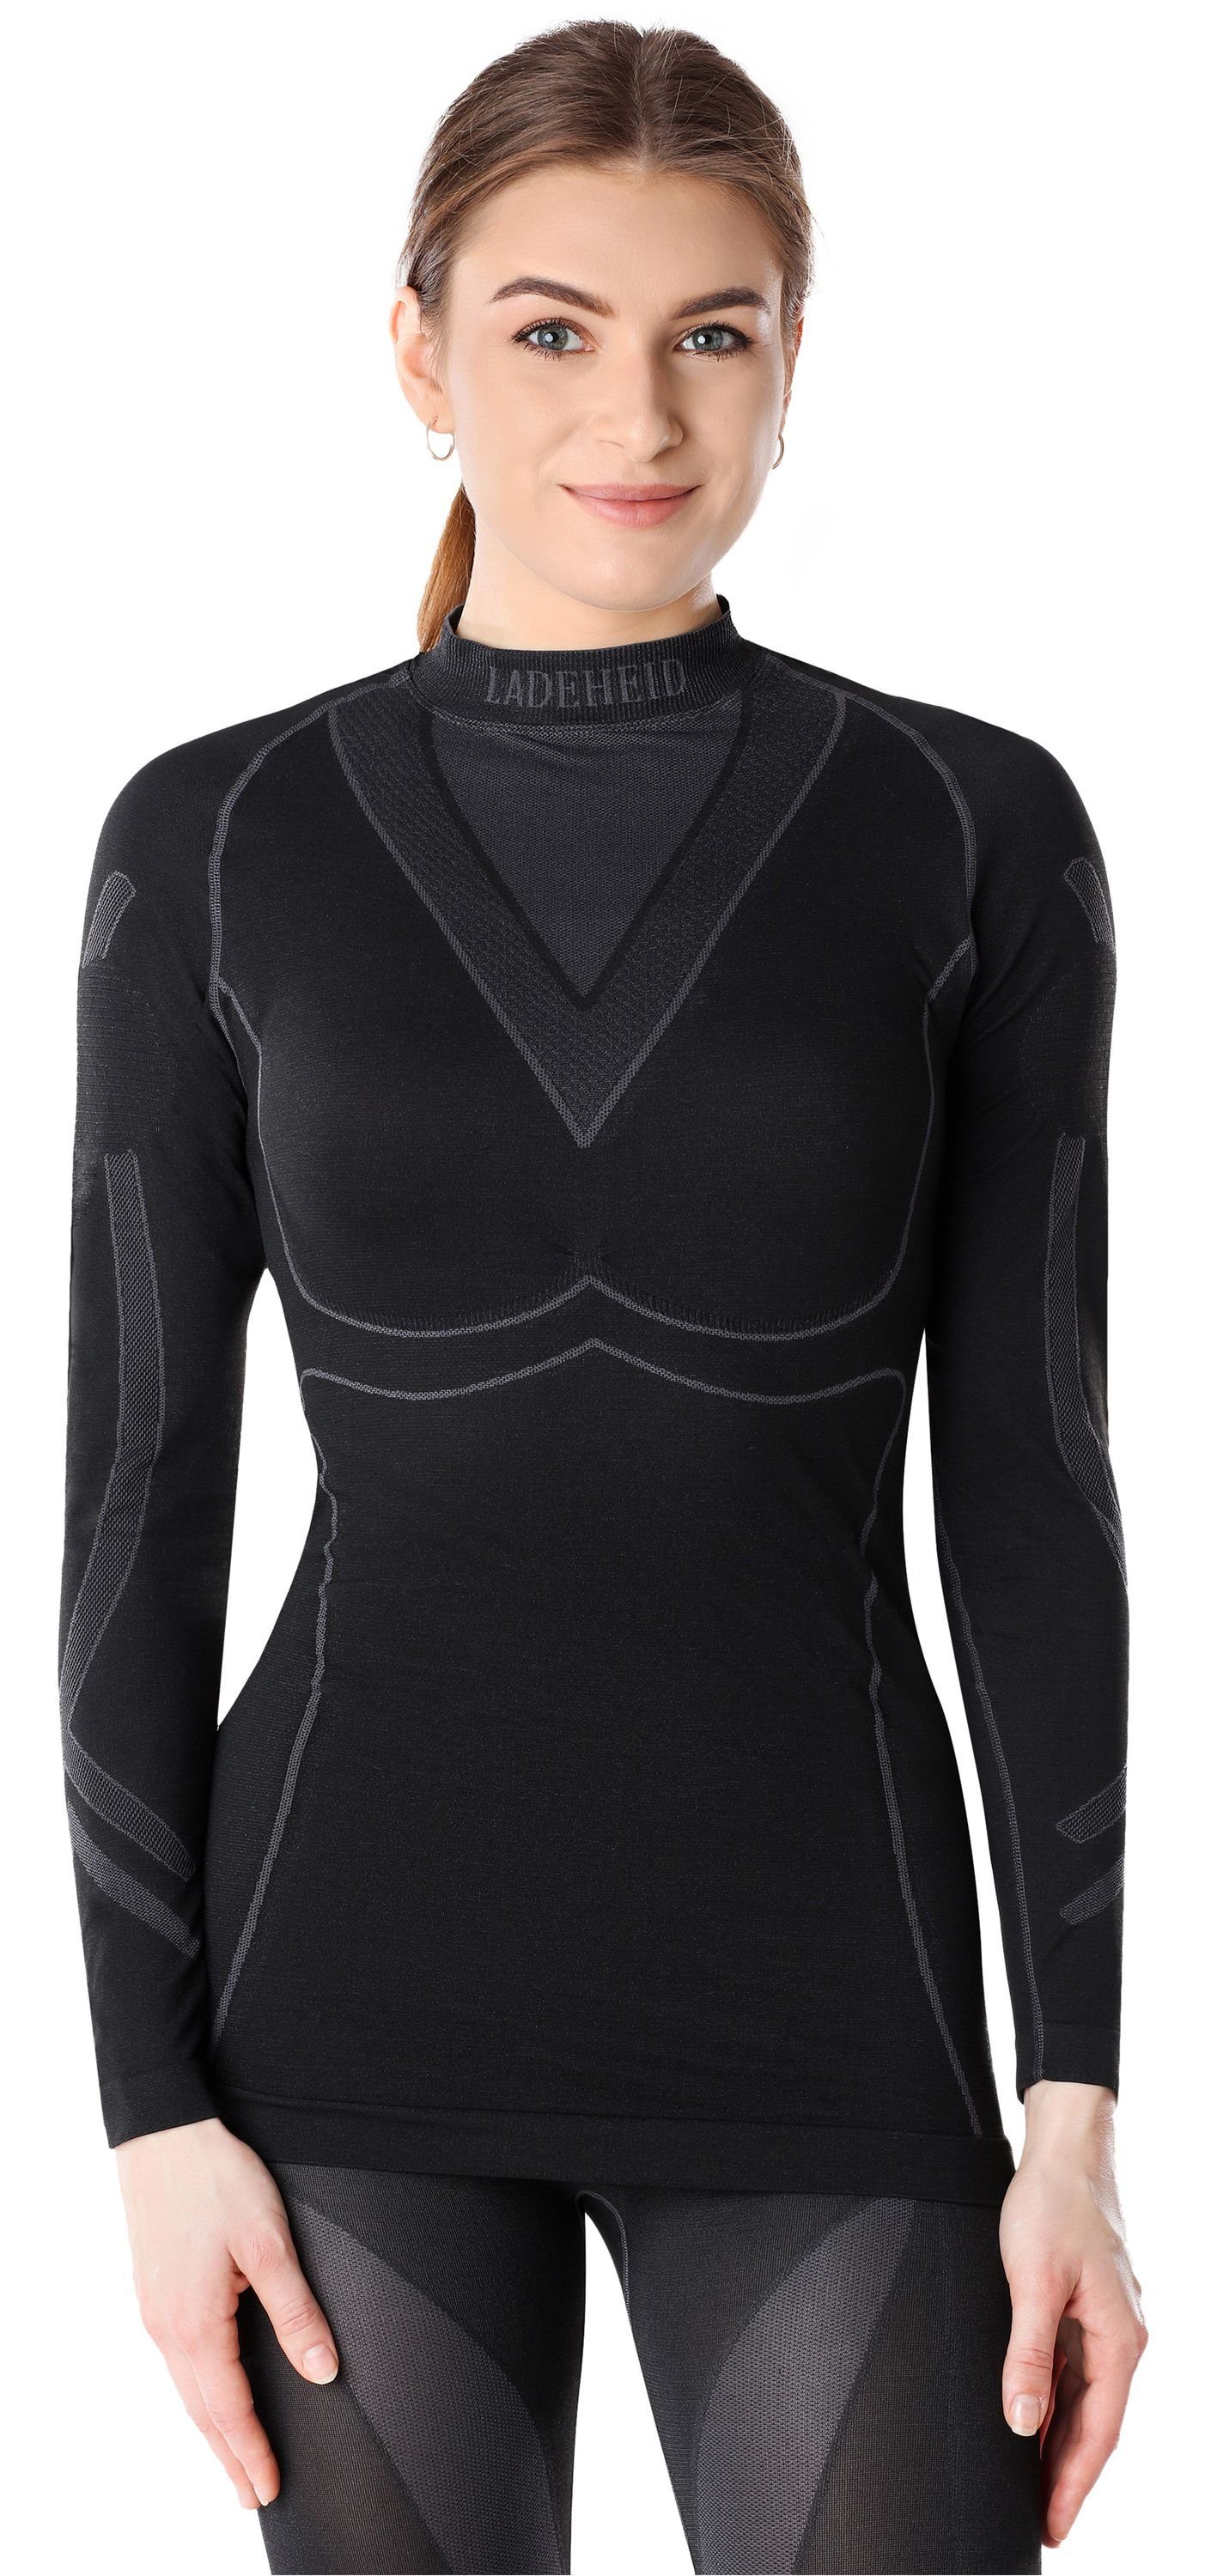 Schwarz/Graphite LAGI004 Shirt Funktionsunterwäsche Damen Ladeheid Funktionsunterhemd Thermoaktiv langarm